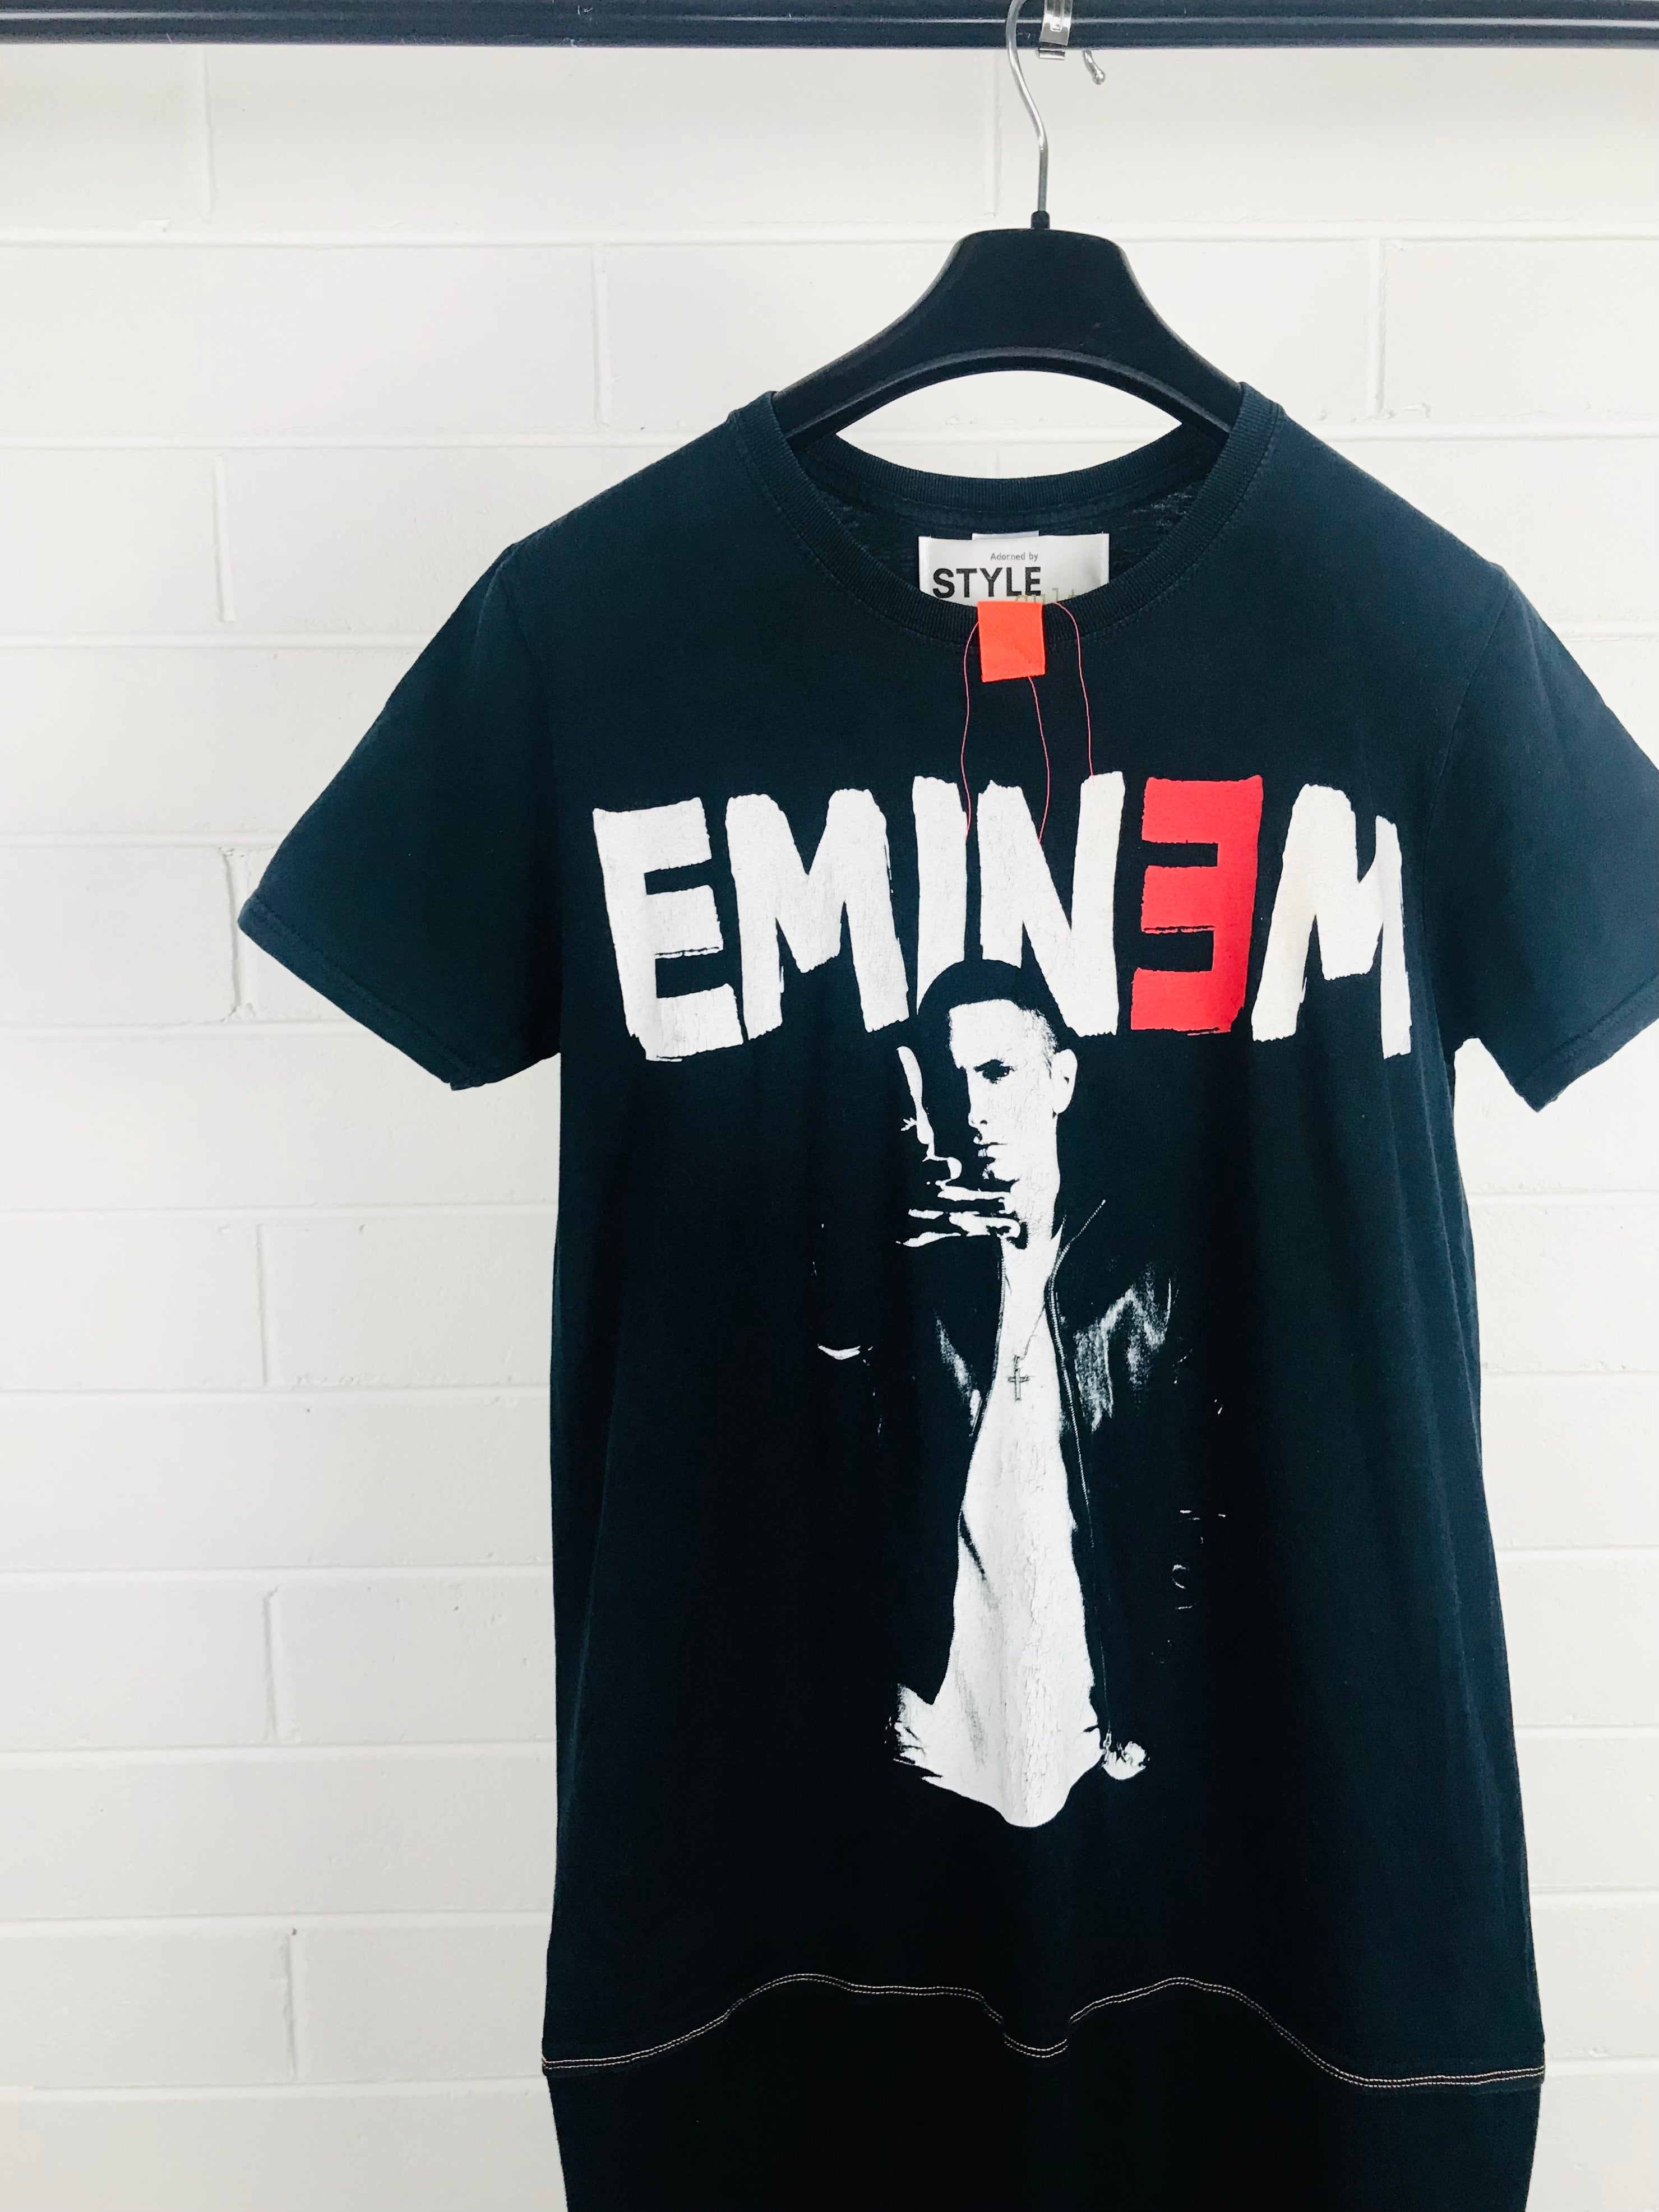 #8 Eminem x Green Day